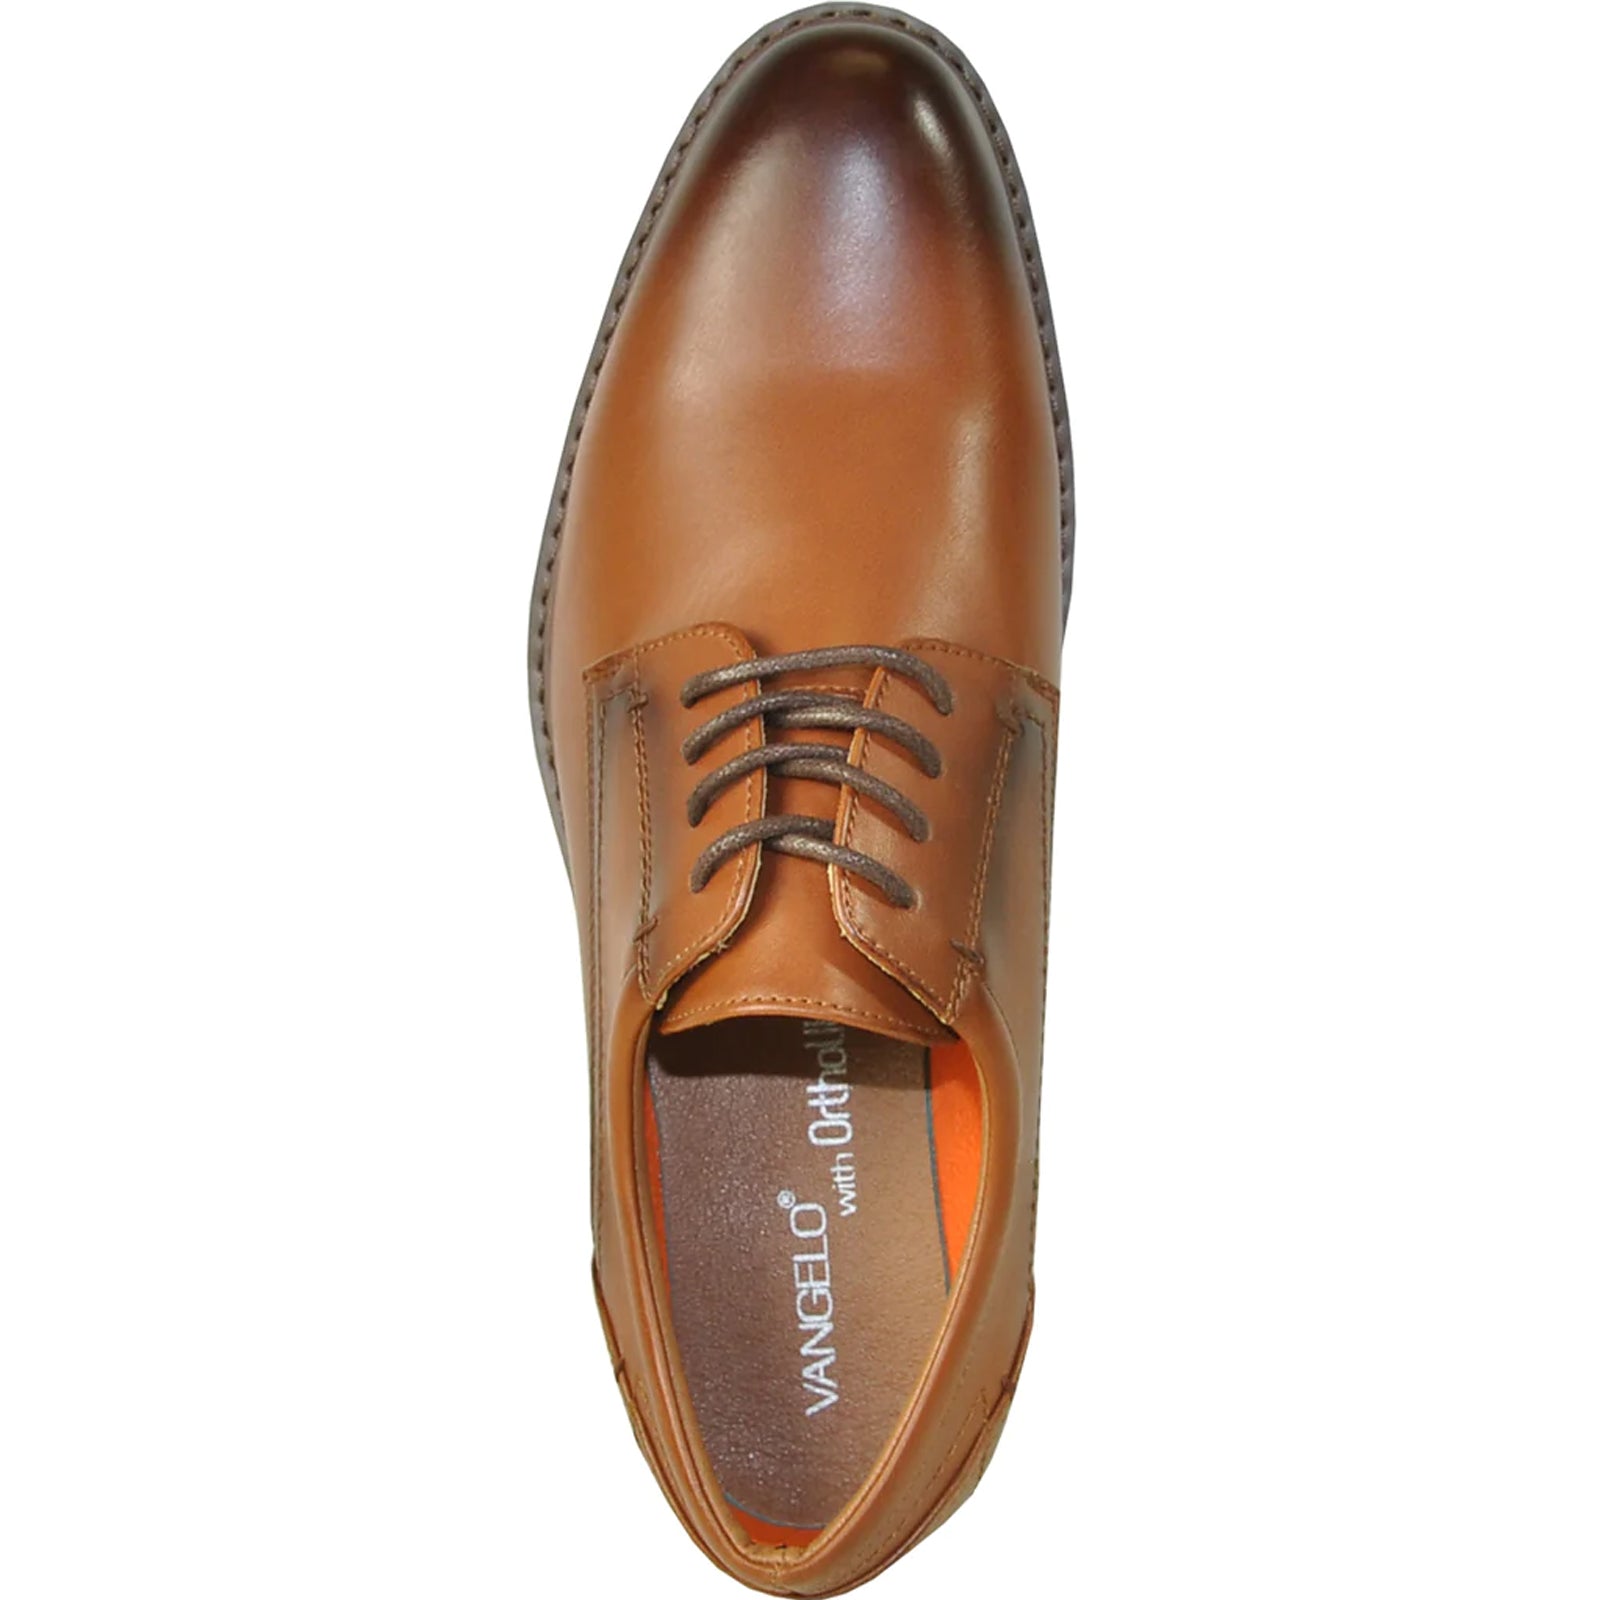 "Antique Cognac Brown Oxford Dress Shoe for Men - Relaxed Fit"